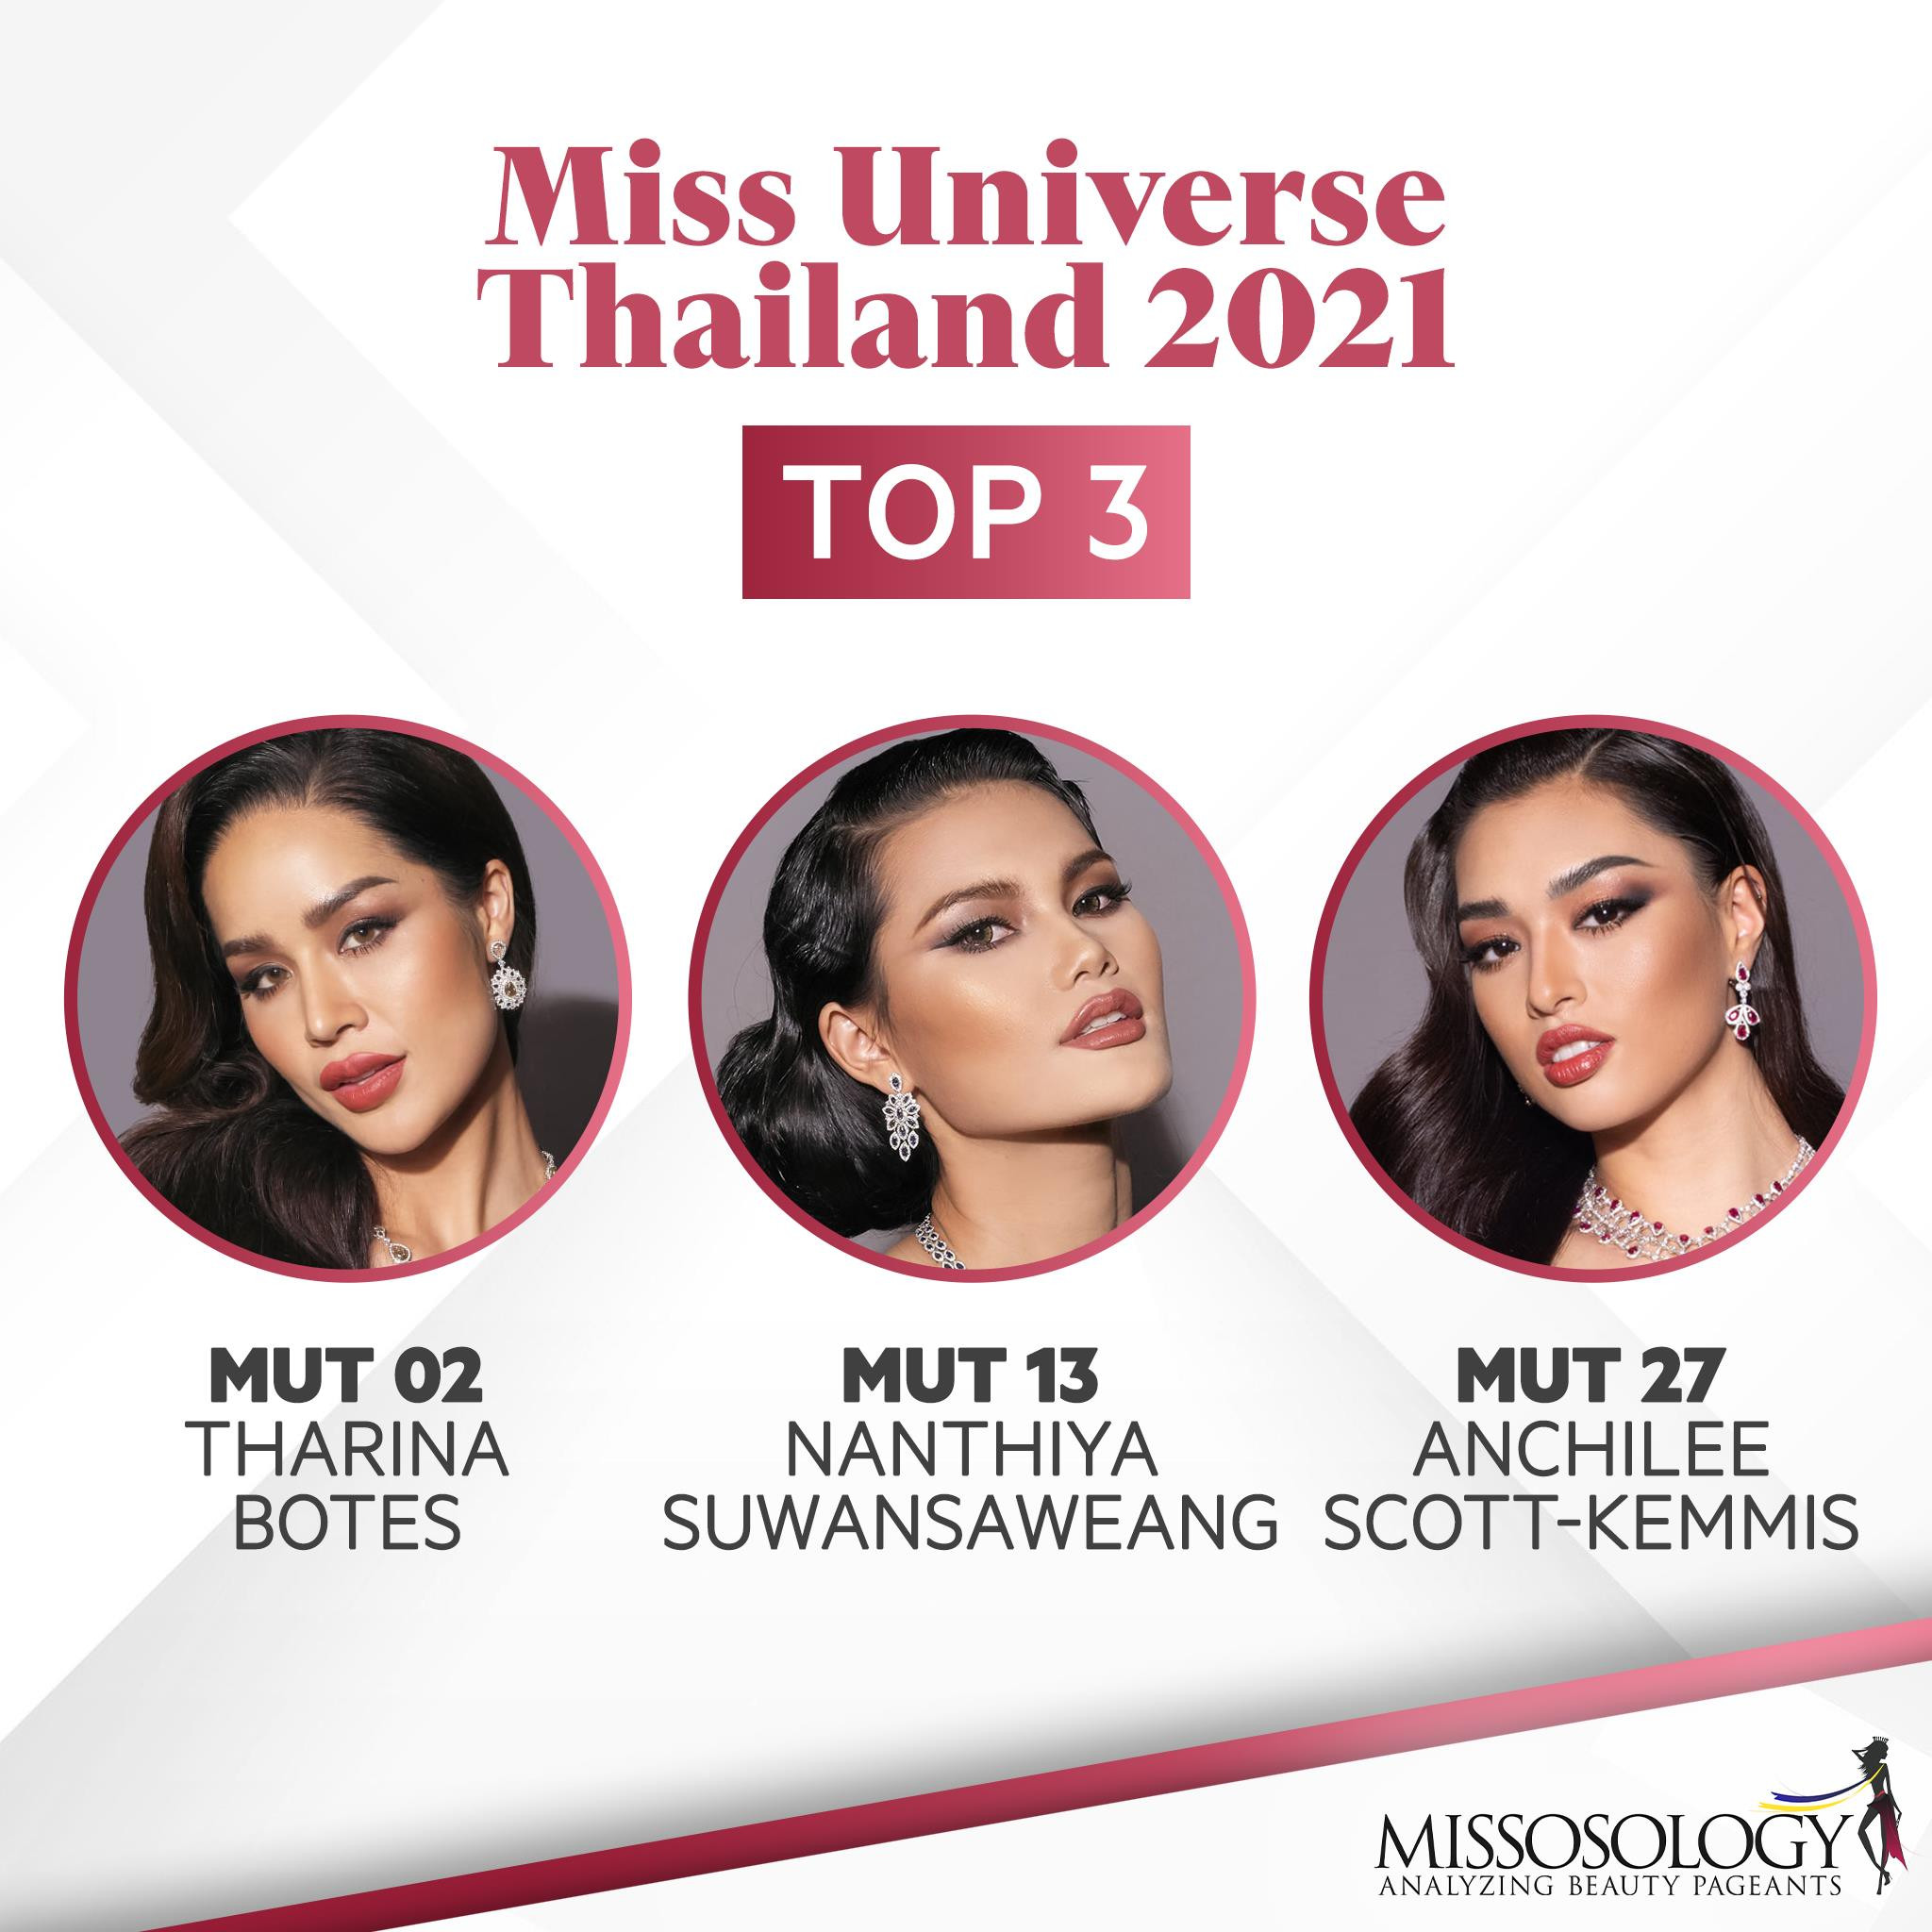 anchilee scott-kemmis vence miss universe thailand 2021. 5IeoTF